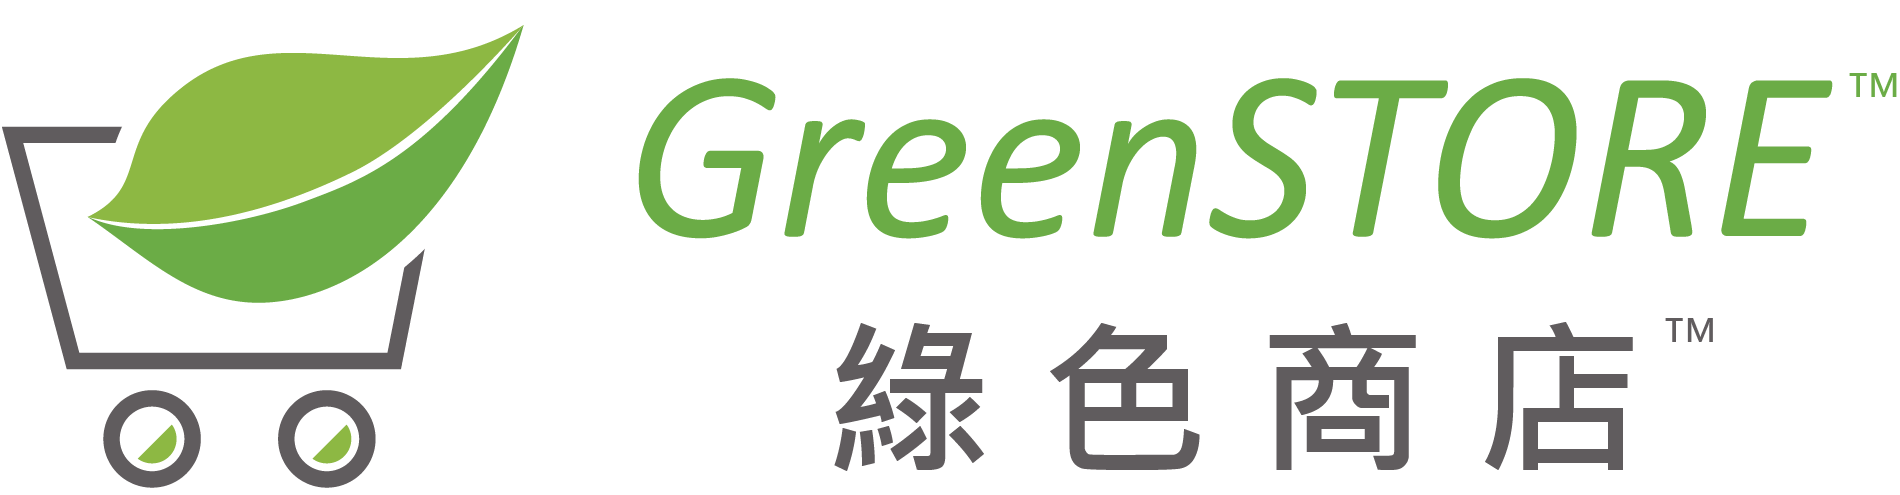 GreenSTORE綠色商店